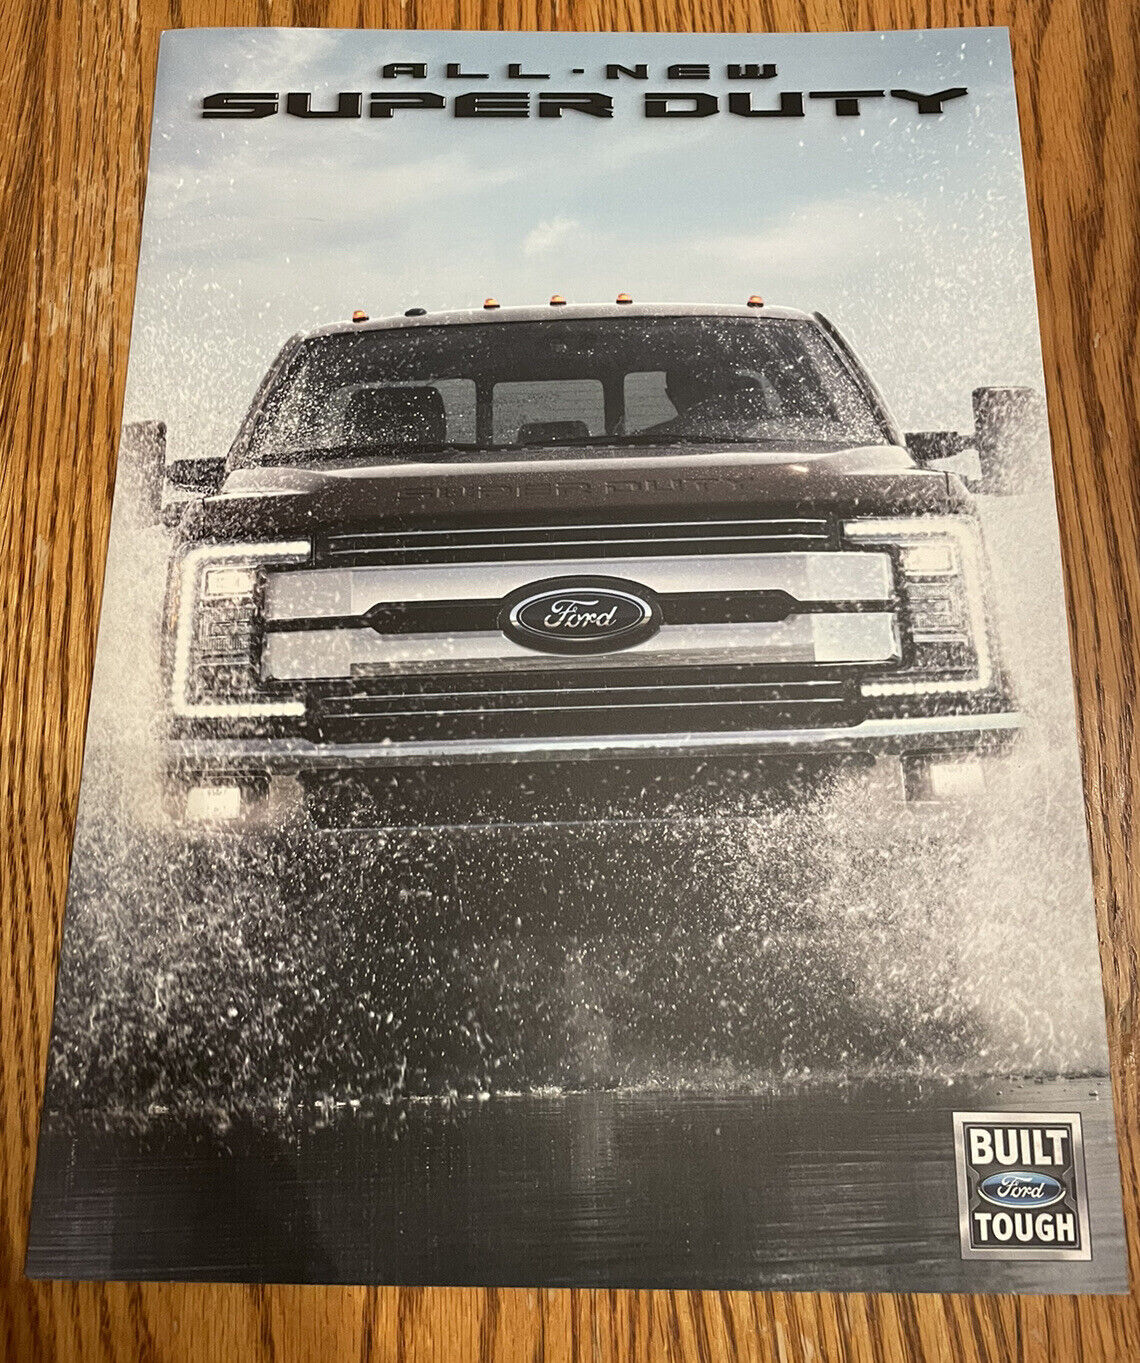 2017 Ford Super Duty Brochure - 2017 Ford Brochures - Ford Brochures